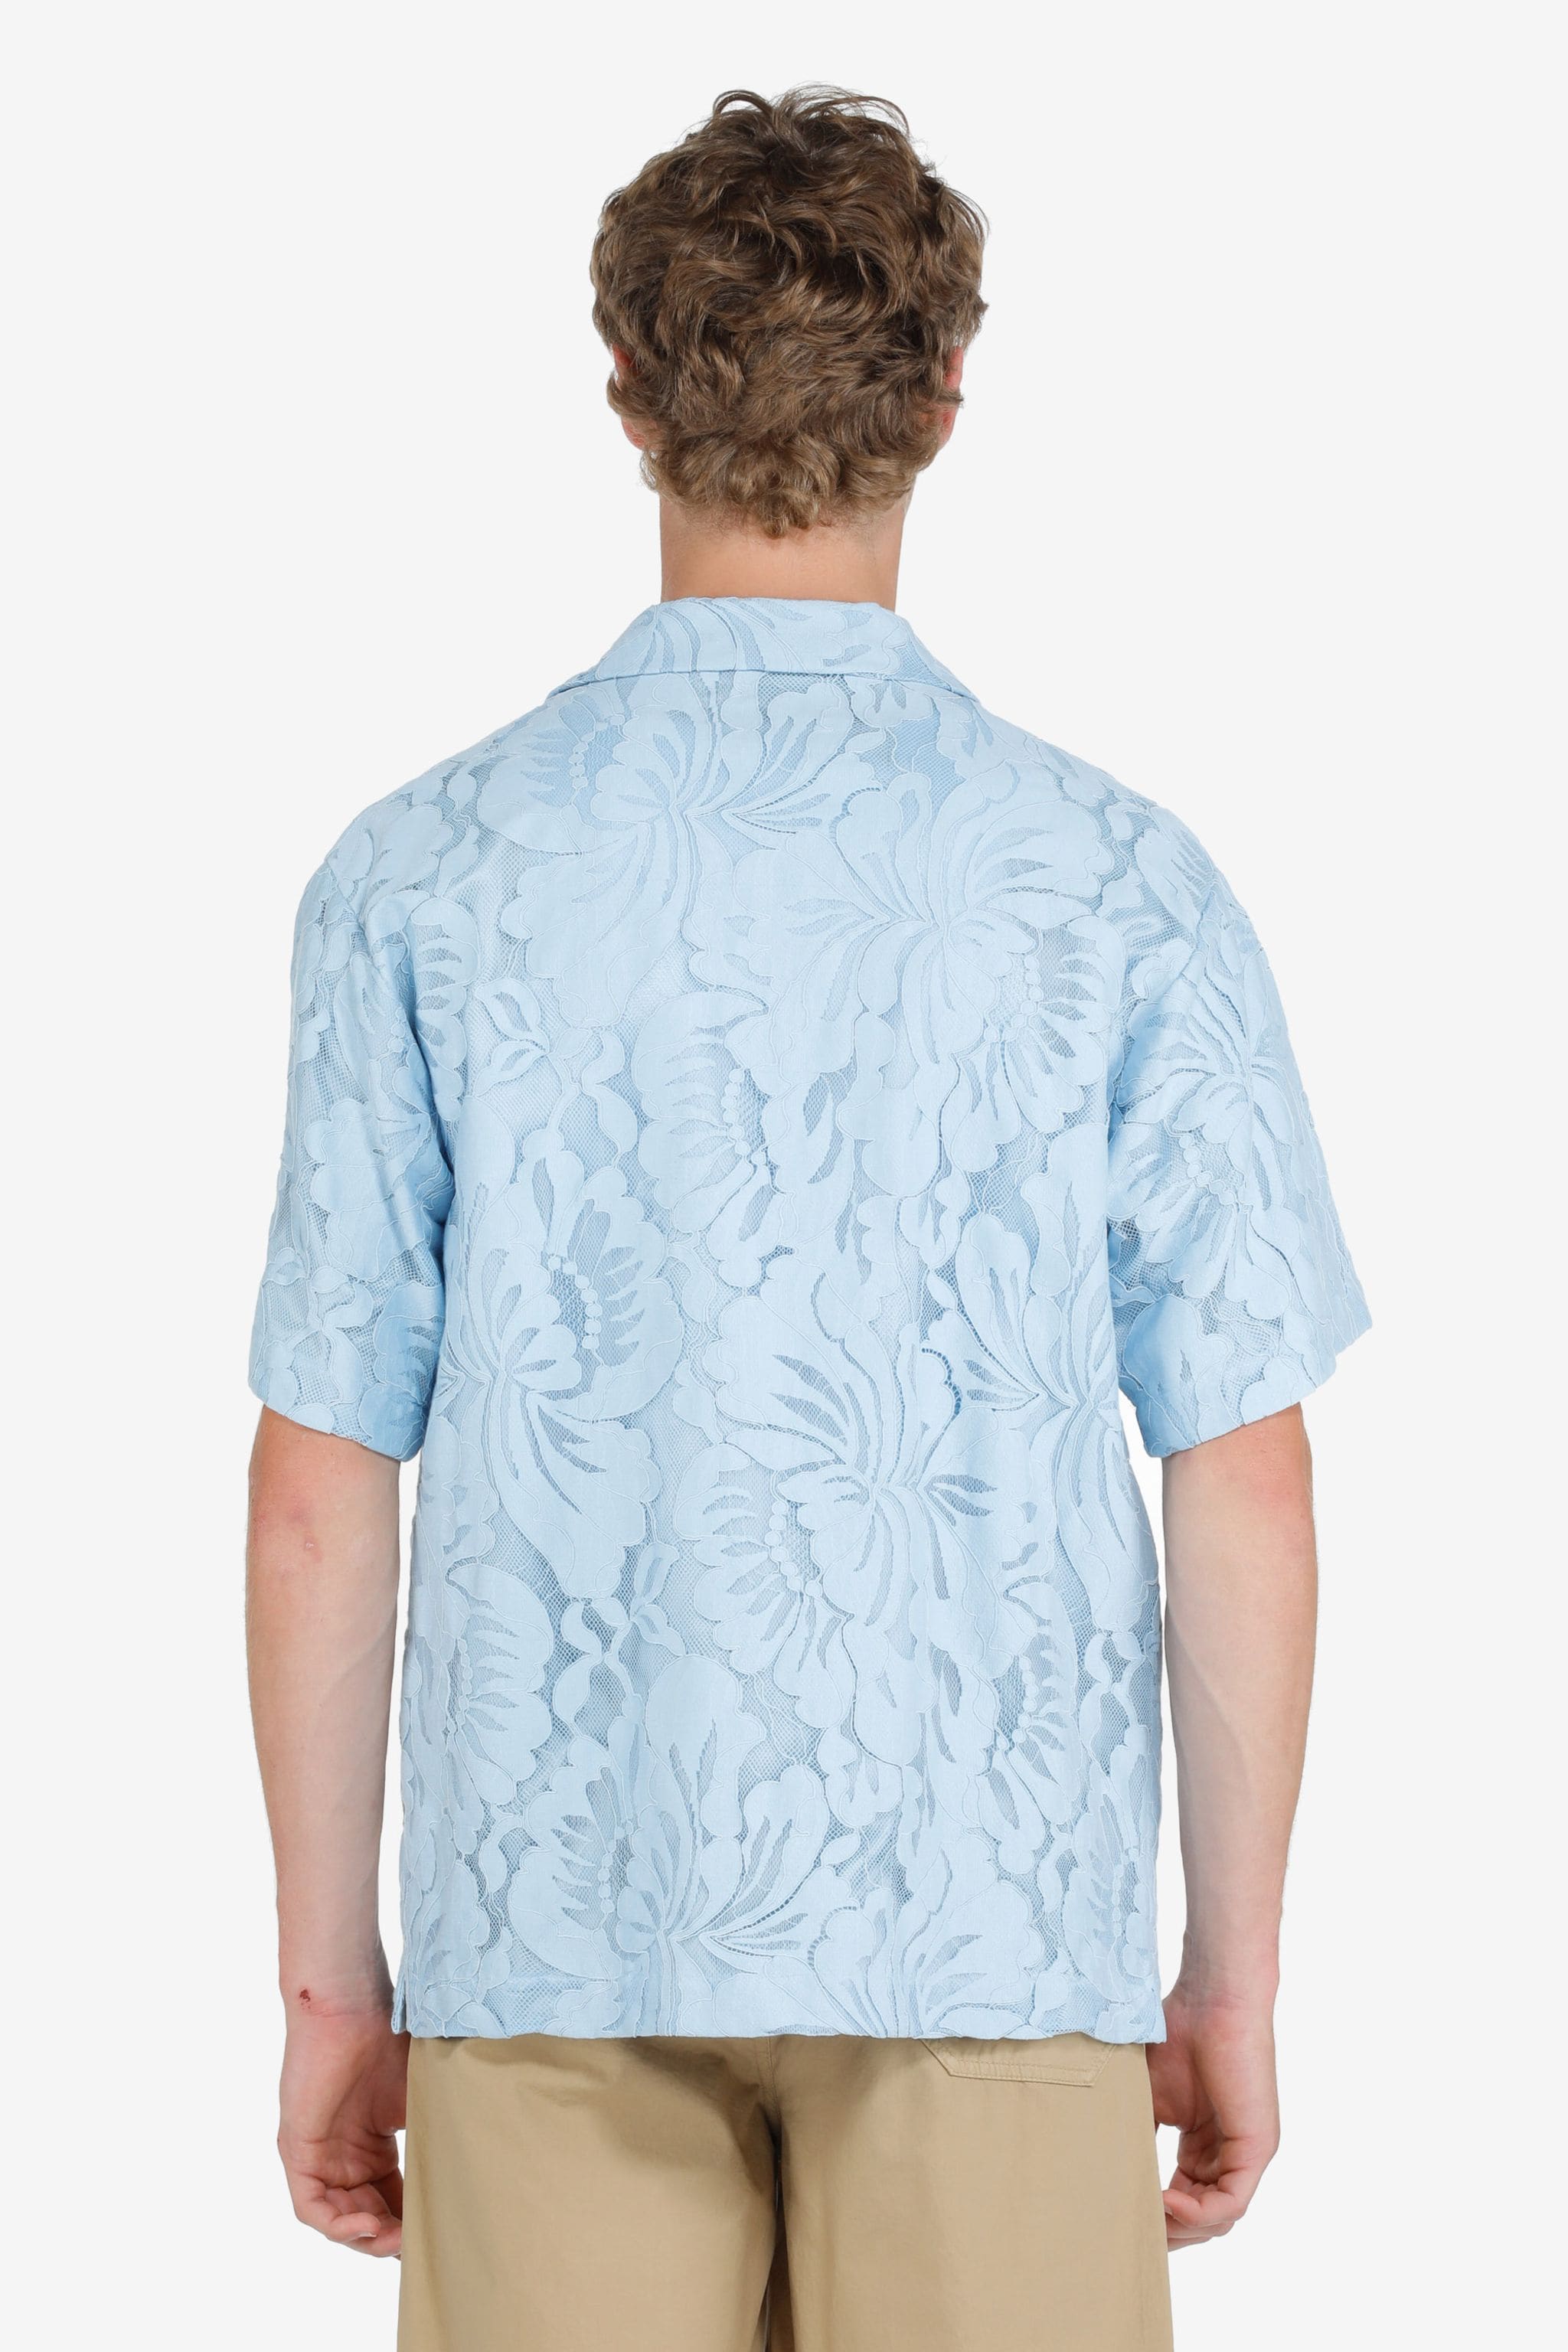 Floral-Appliqué Shirt in blue | N°21 | Official Online Store